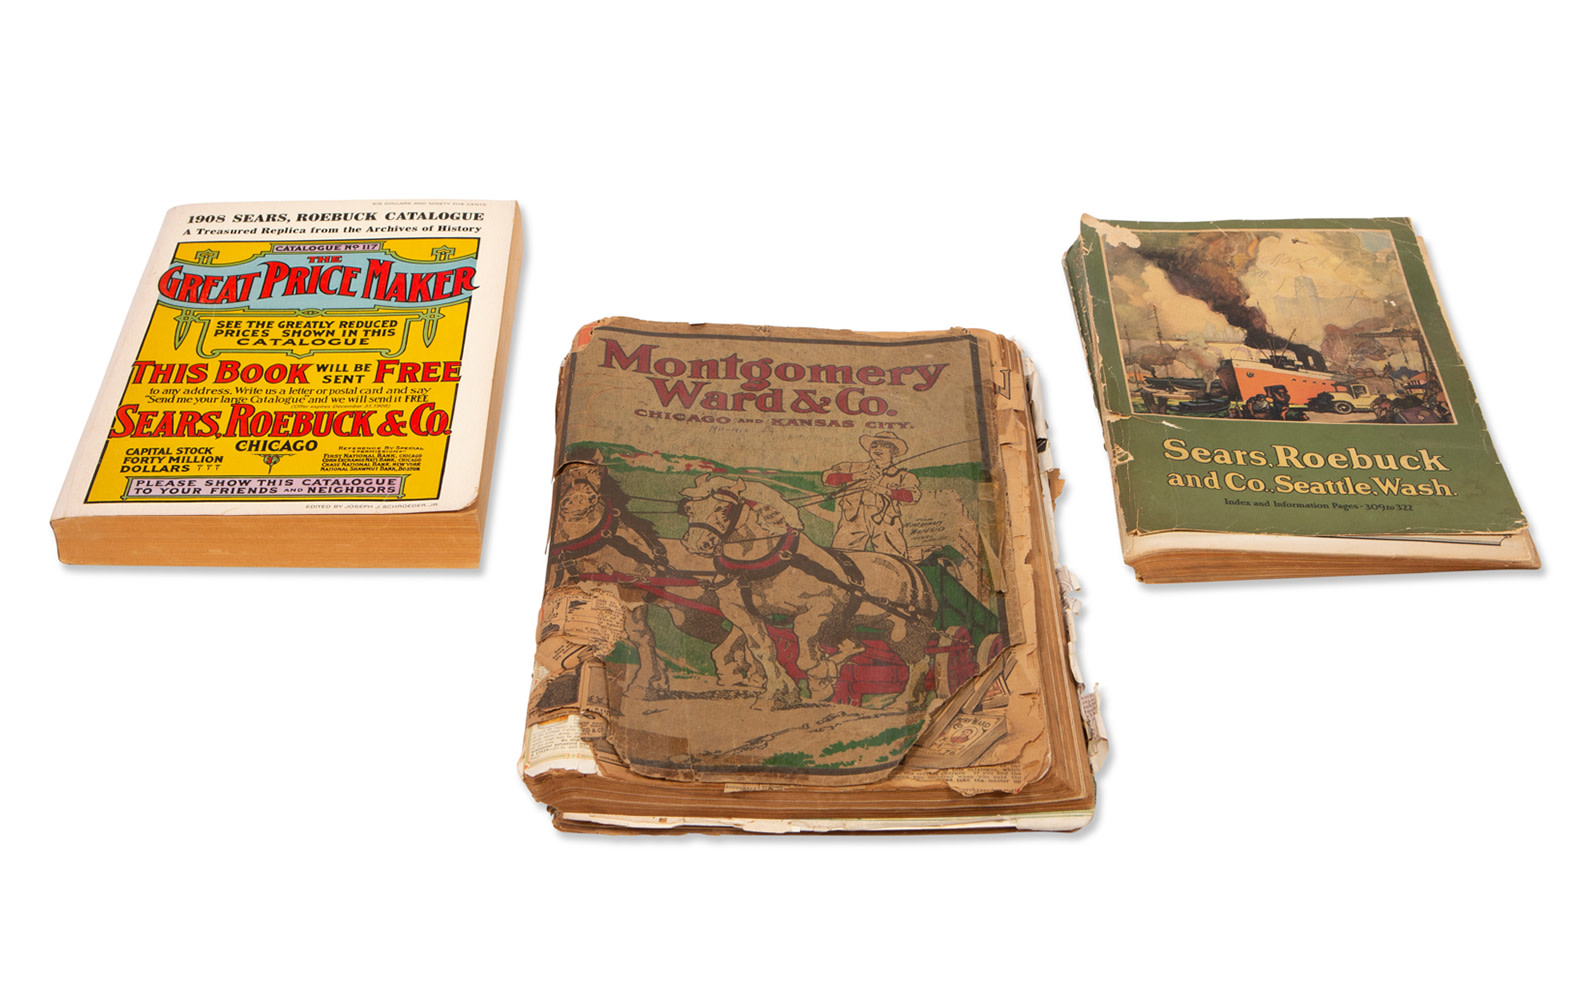 Montgomery Ward & Co. and Sears Roebuck & Company Catalogues, c 